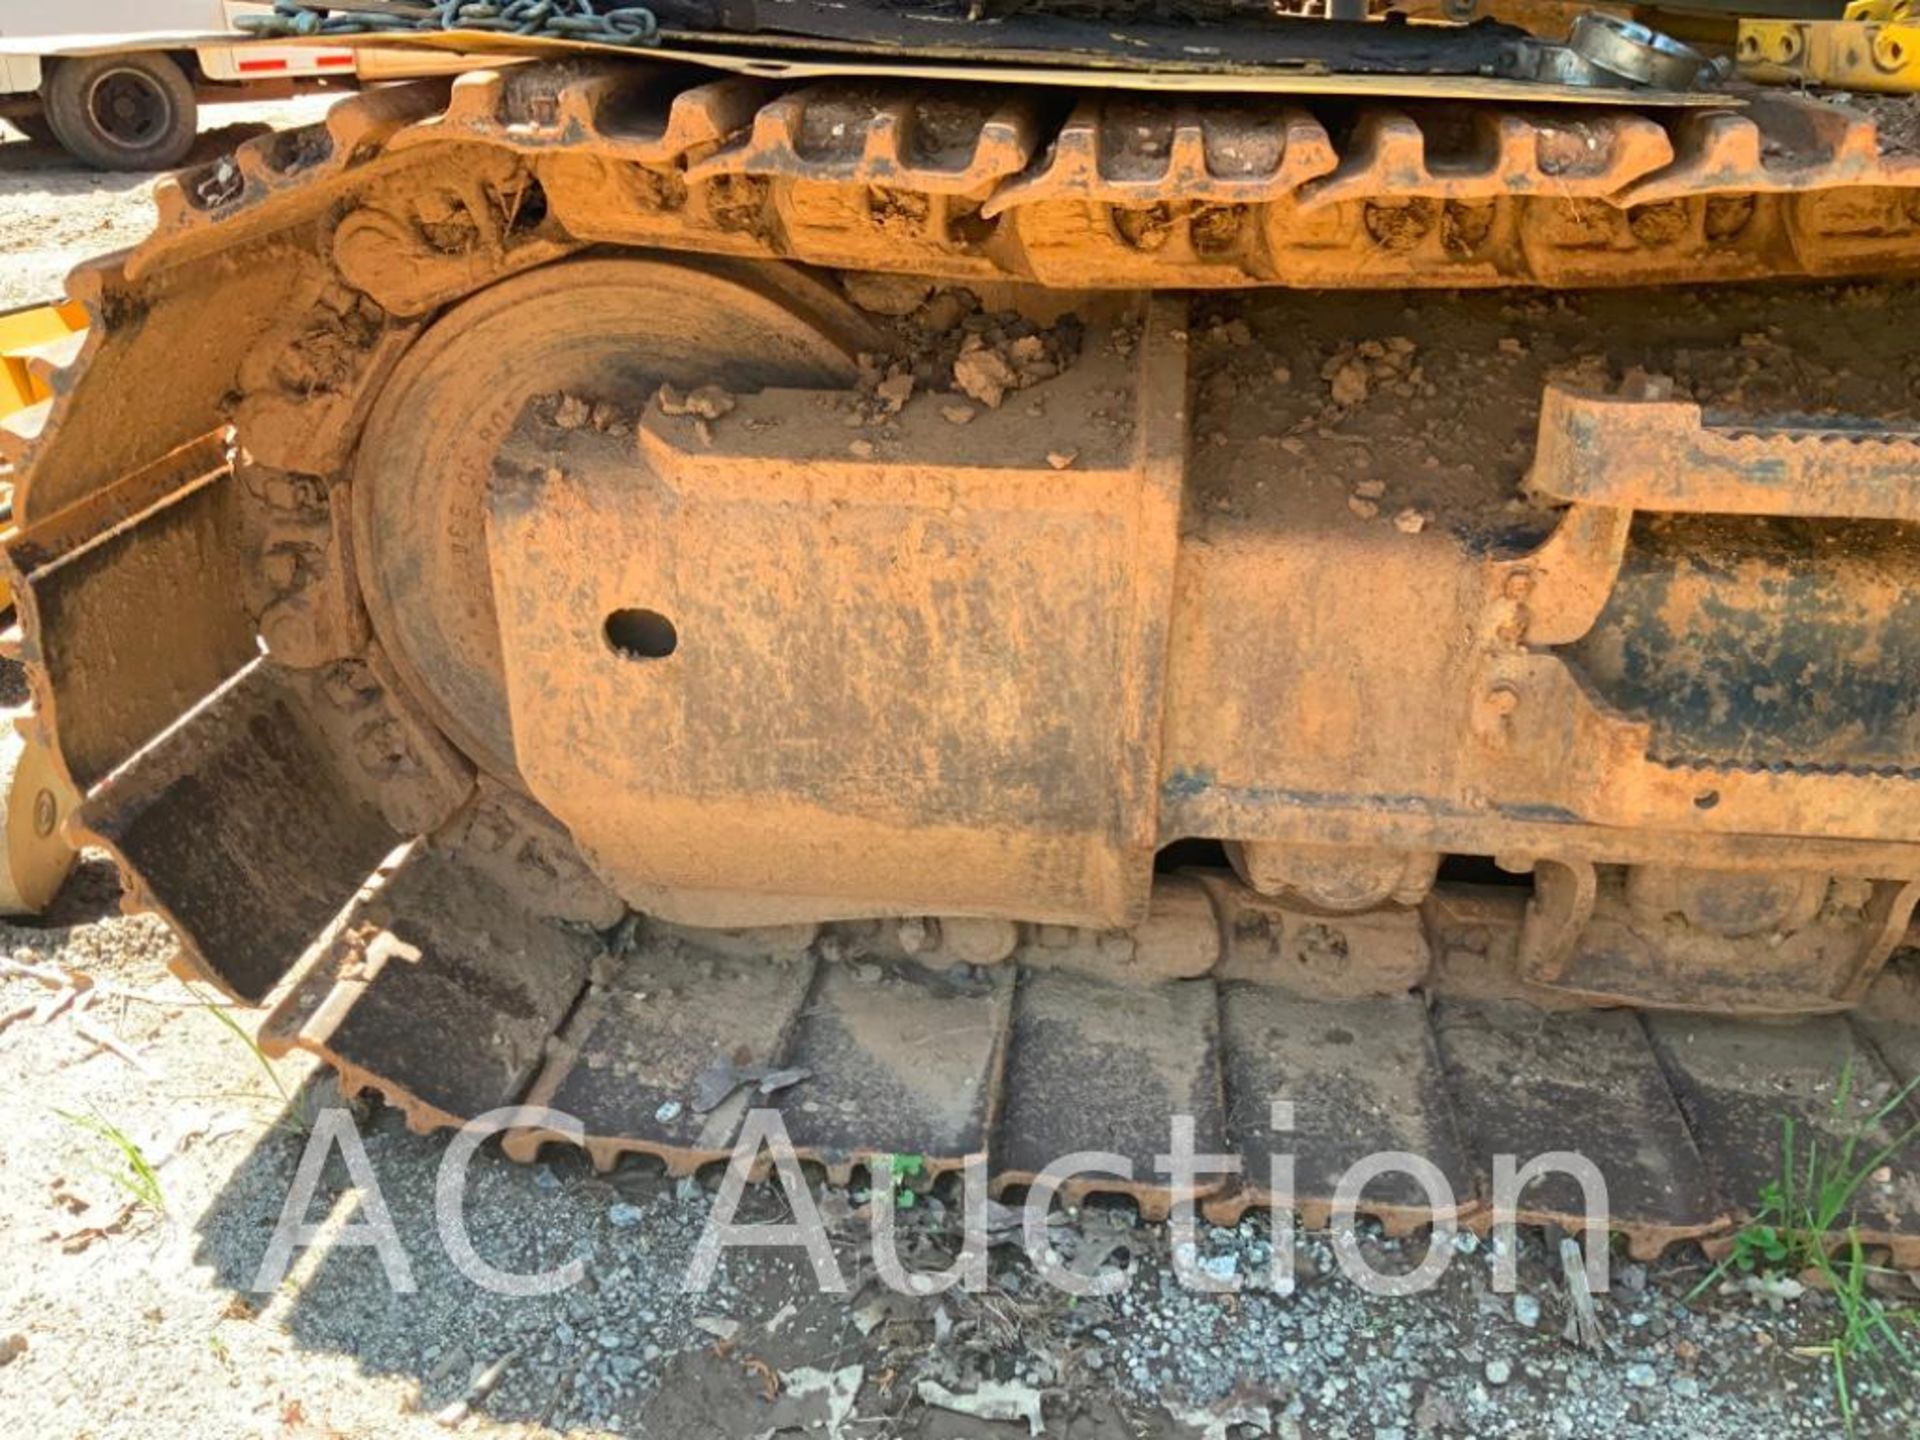 2020 Komatsu PC490LC-11 Hydraulic Excavator - Image 13 of 81